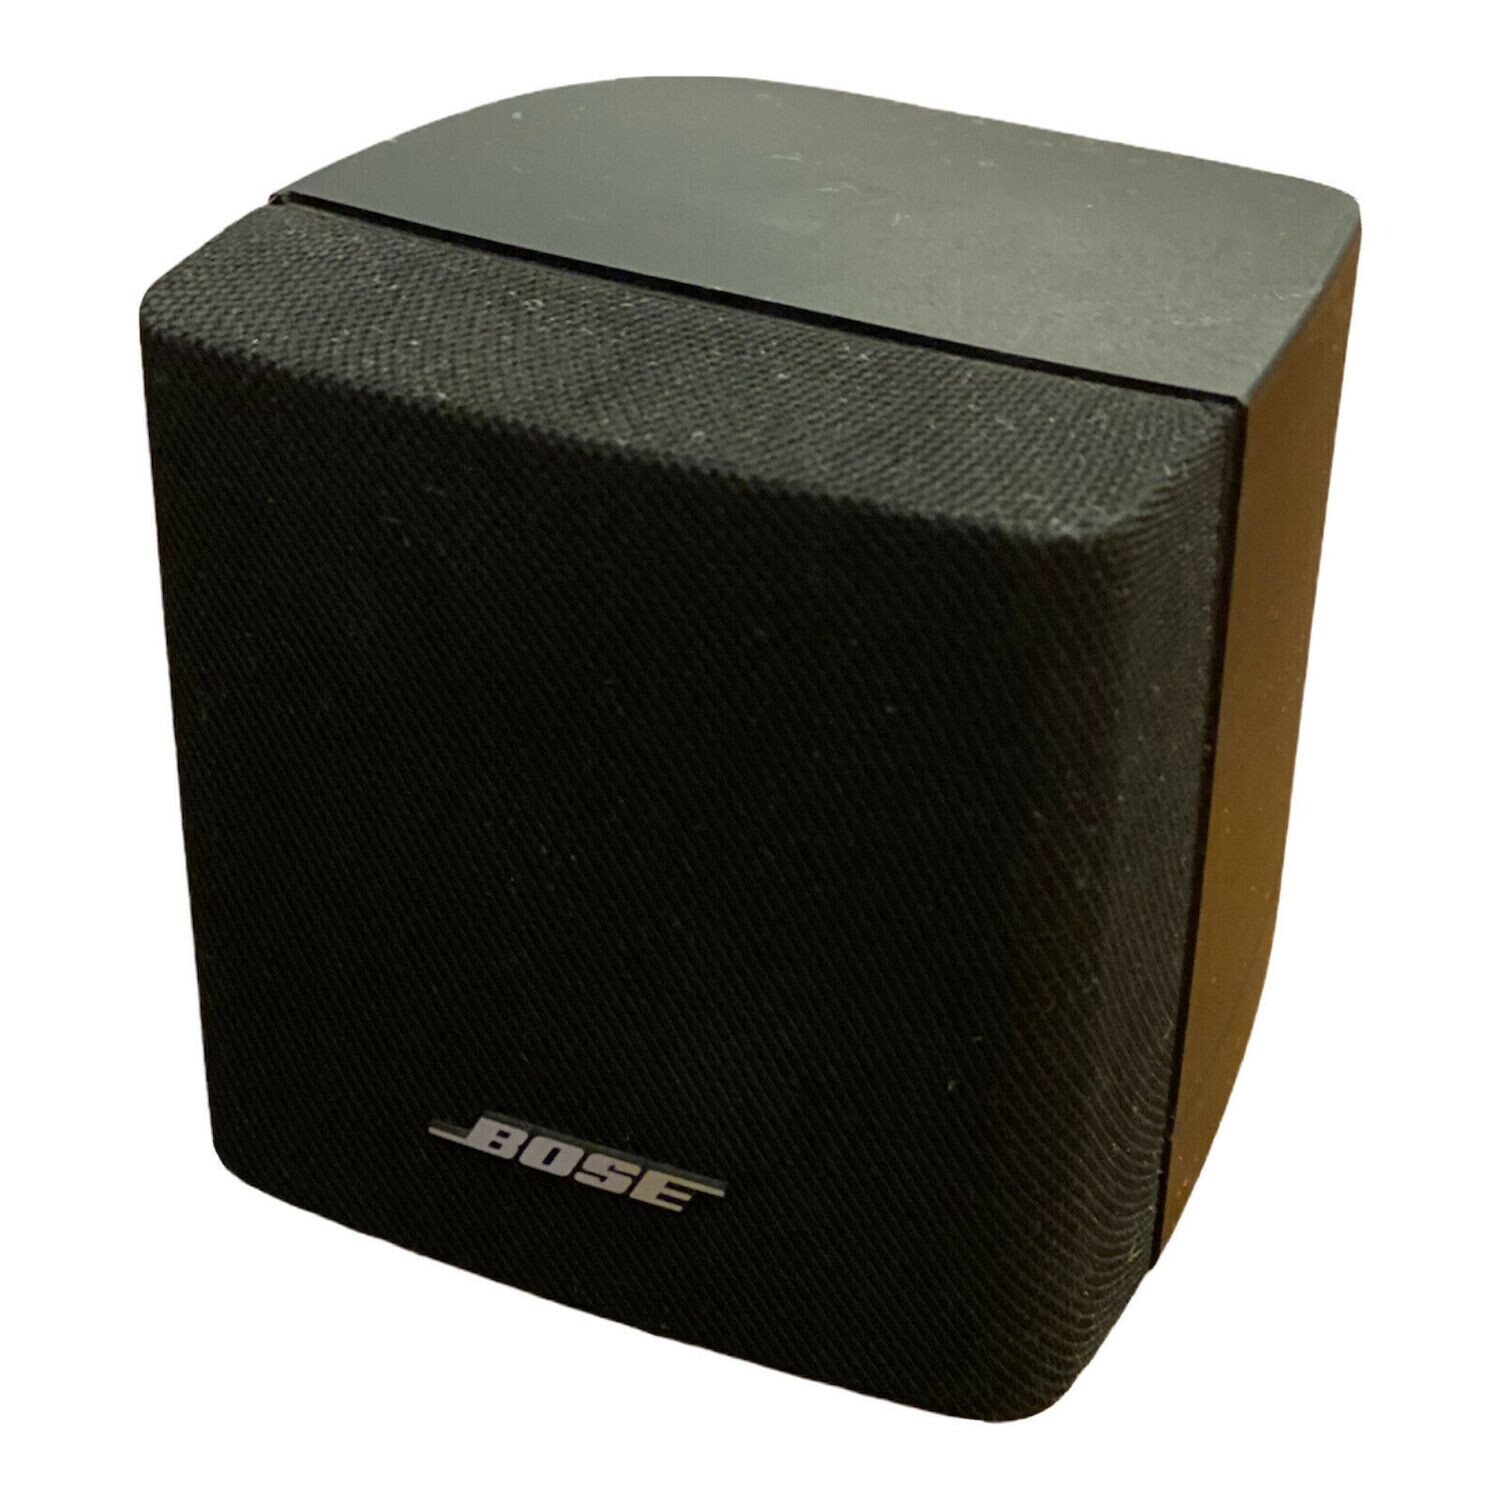 Bose Single Cube Speaker for Bose Acoustimass® 6 home theater speaker system